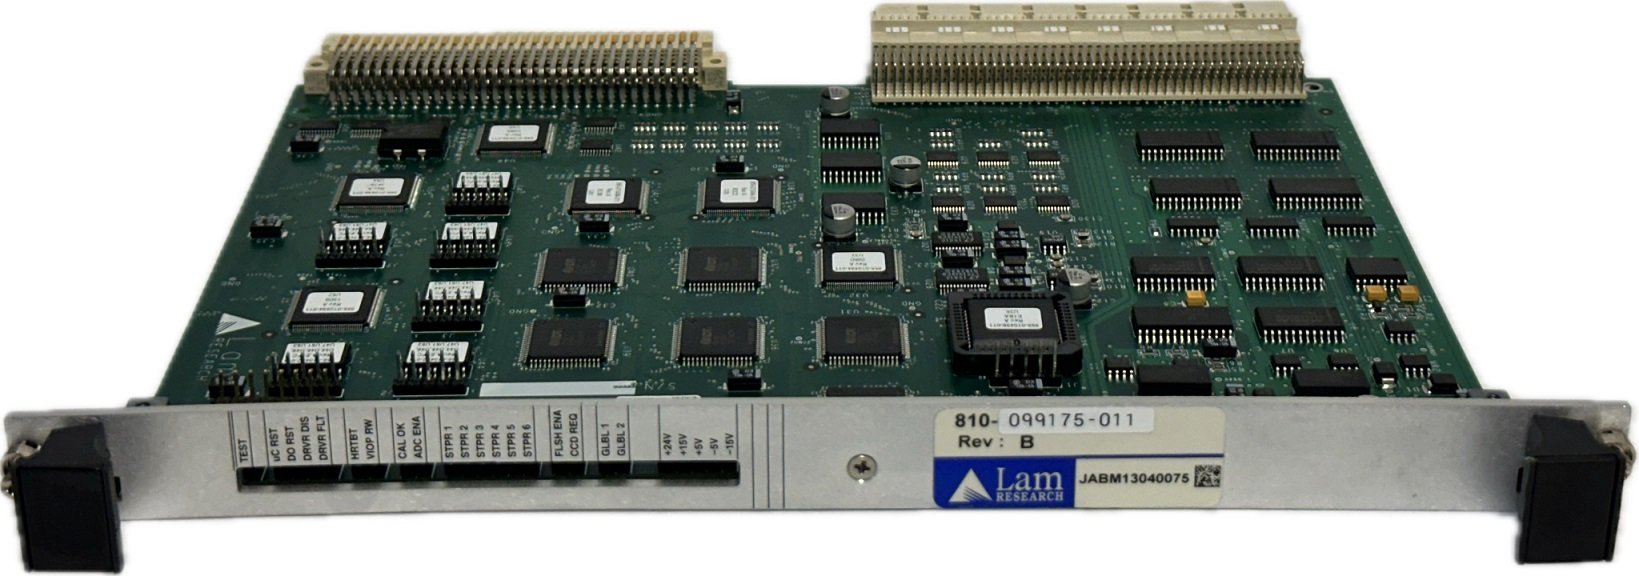 LAM RESEARCH PCB BOARD 810-099175-011   SKUE14.jpg